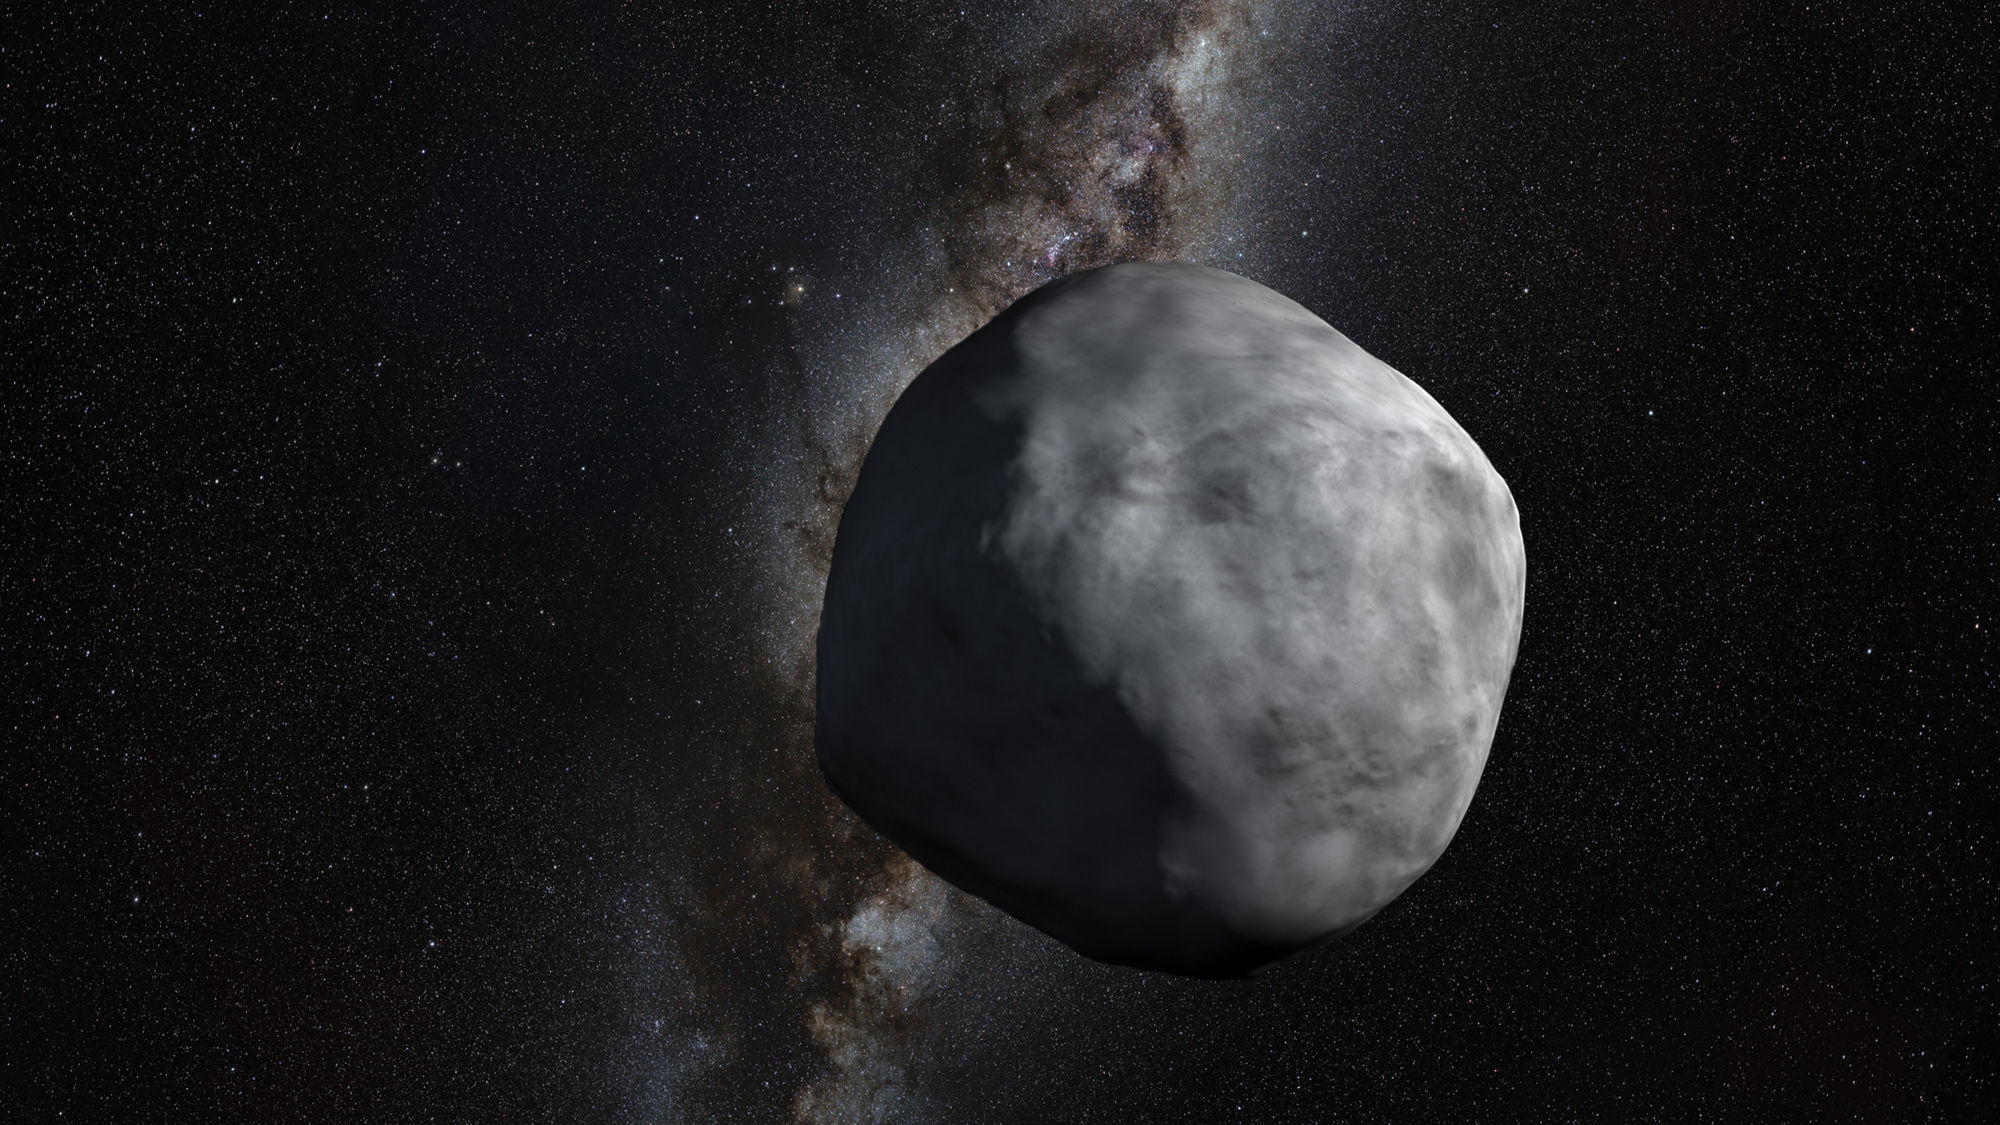  An artist's impression of asteroid Bennu, the target of NASA's OSIRIS-REx sample return mission. Credit: NASA's Goddard Space Flight Center, Greenbelt, Maryland 